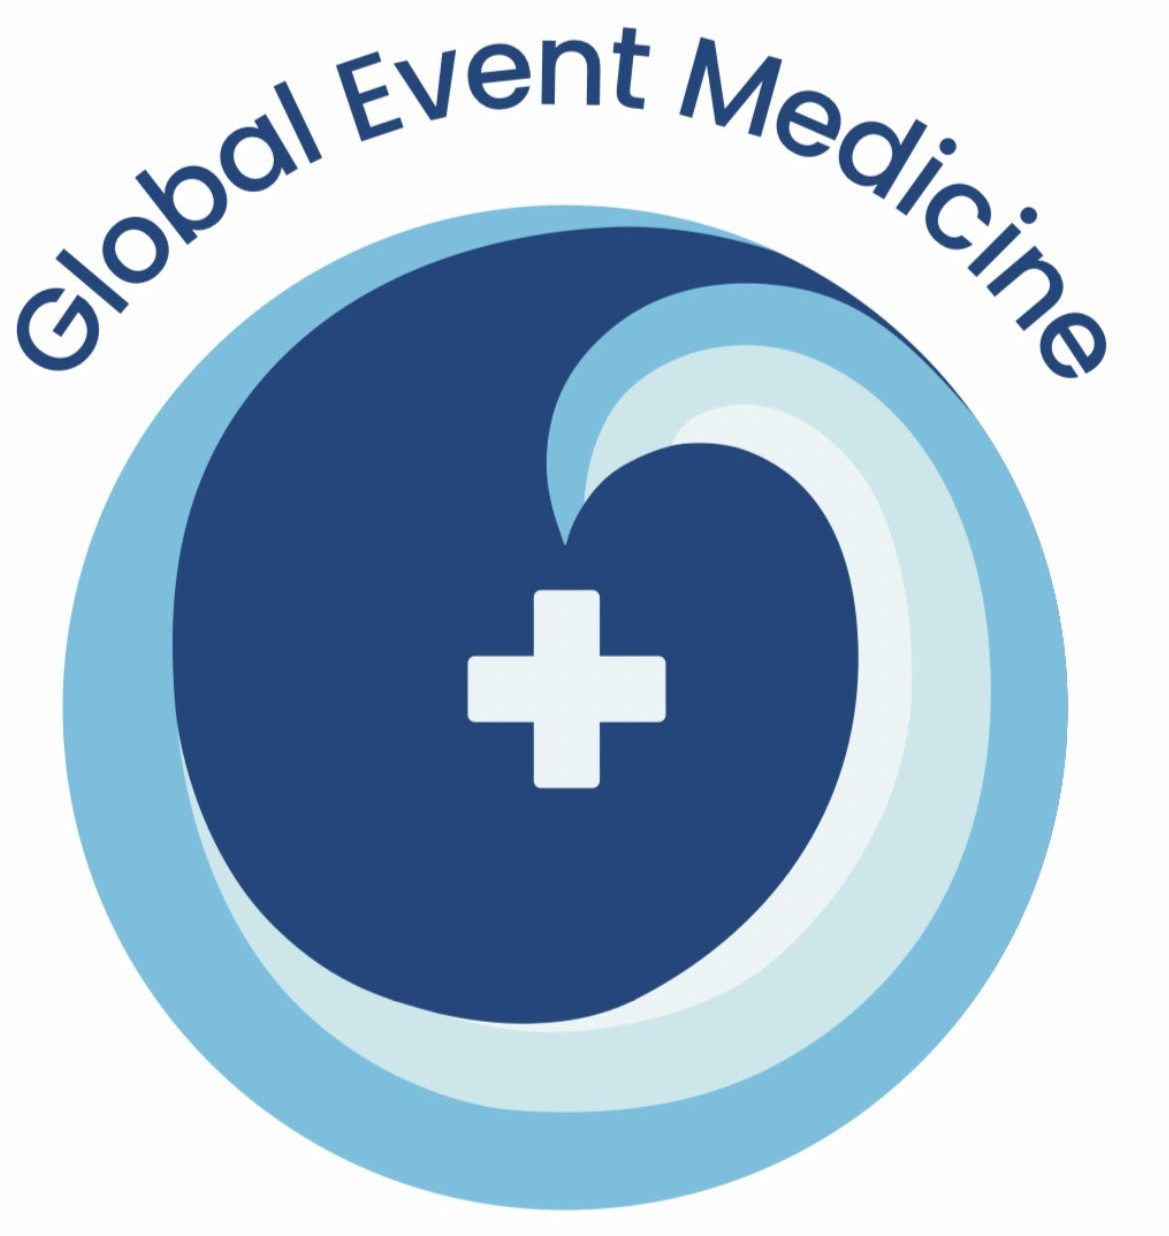 GLOBAL EVENTS MEDICINE